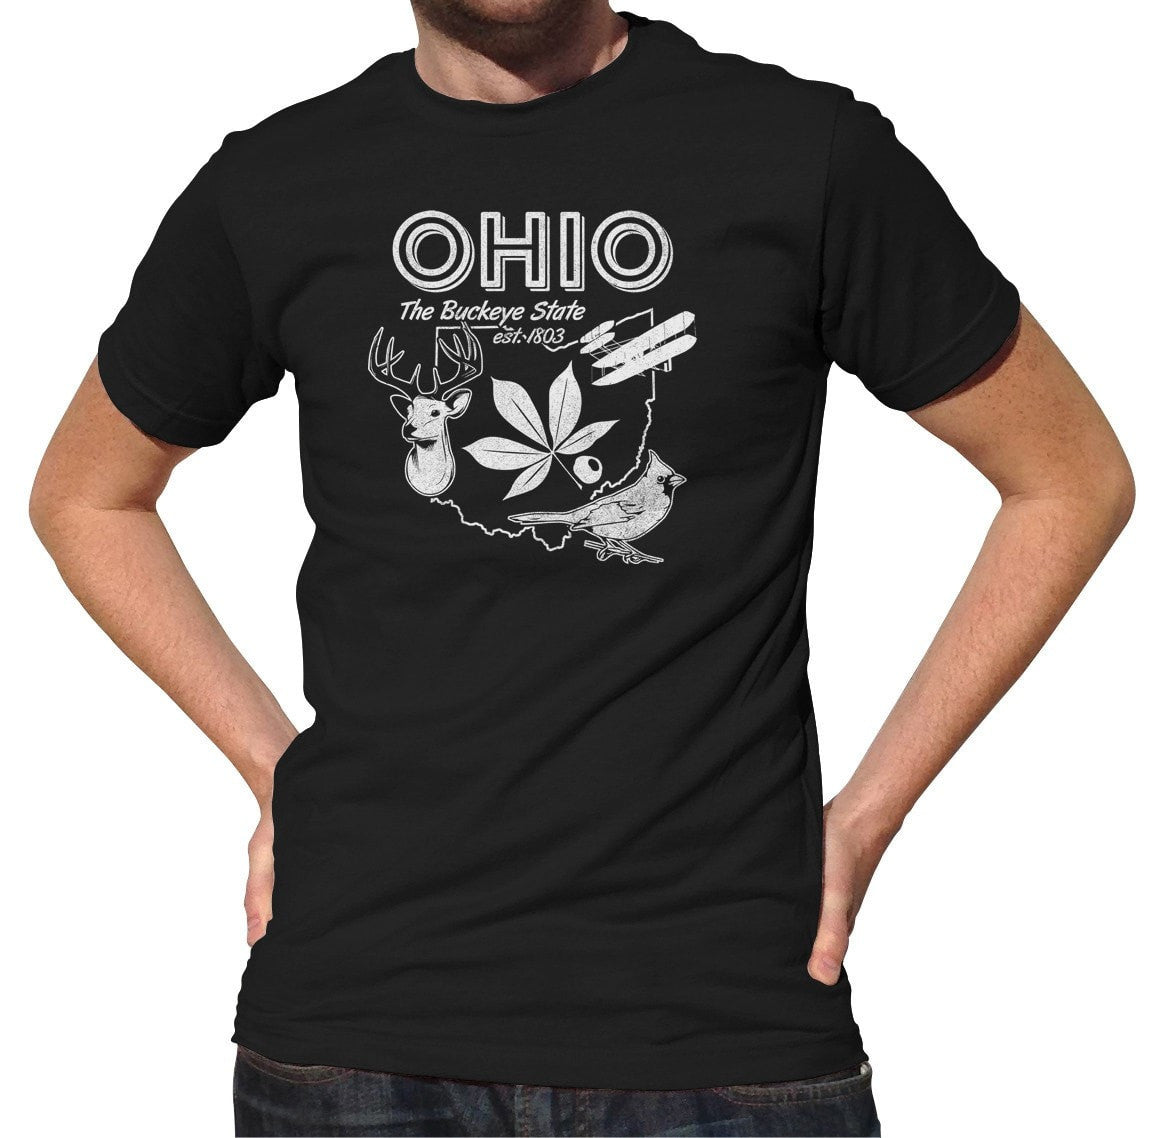 Men's Vintage Ohio State T-Shirt